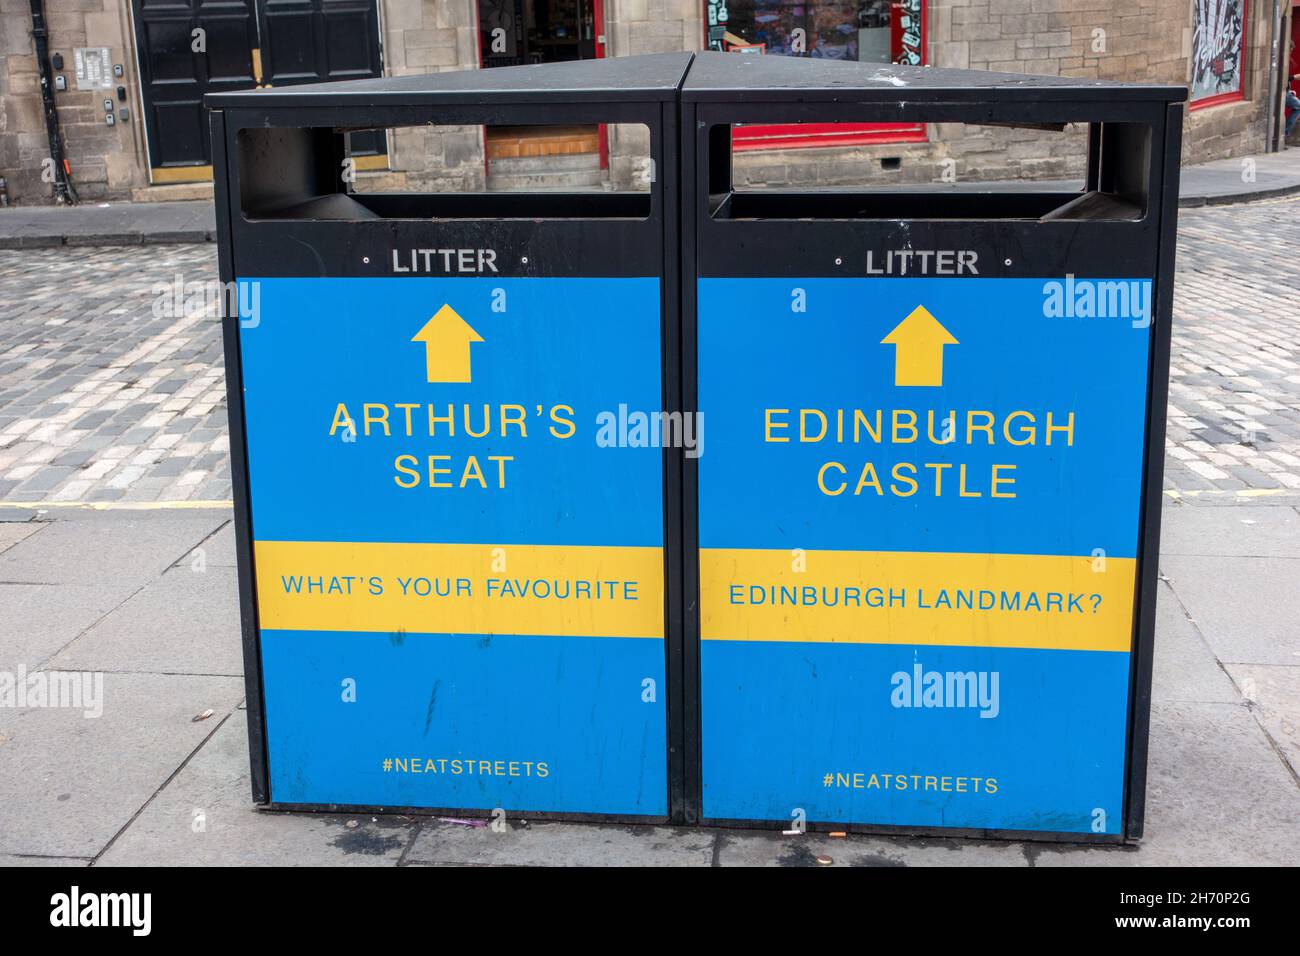 Municipal Council Street Rubbish Garbage Trash Bins Edinburgh Scotland Advertising Tourist Attractions Arthur's Seat And Edinburgh Castle Stock Photo